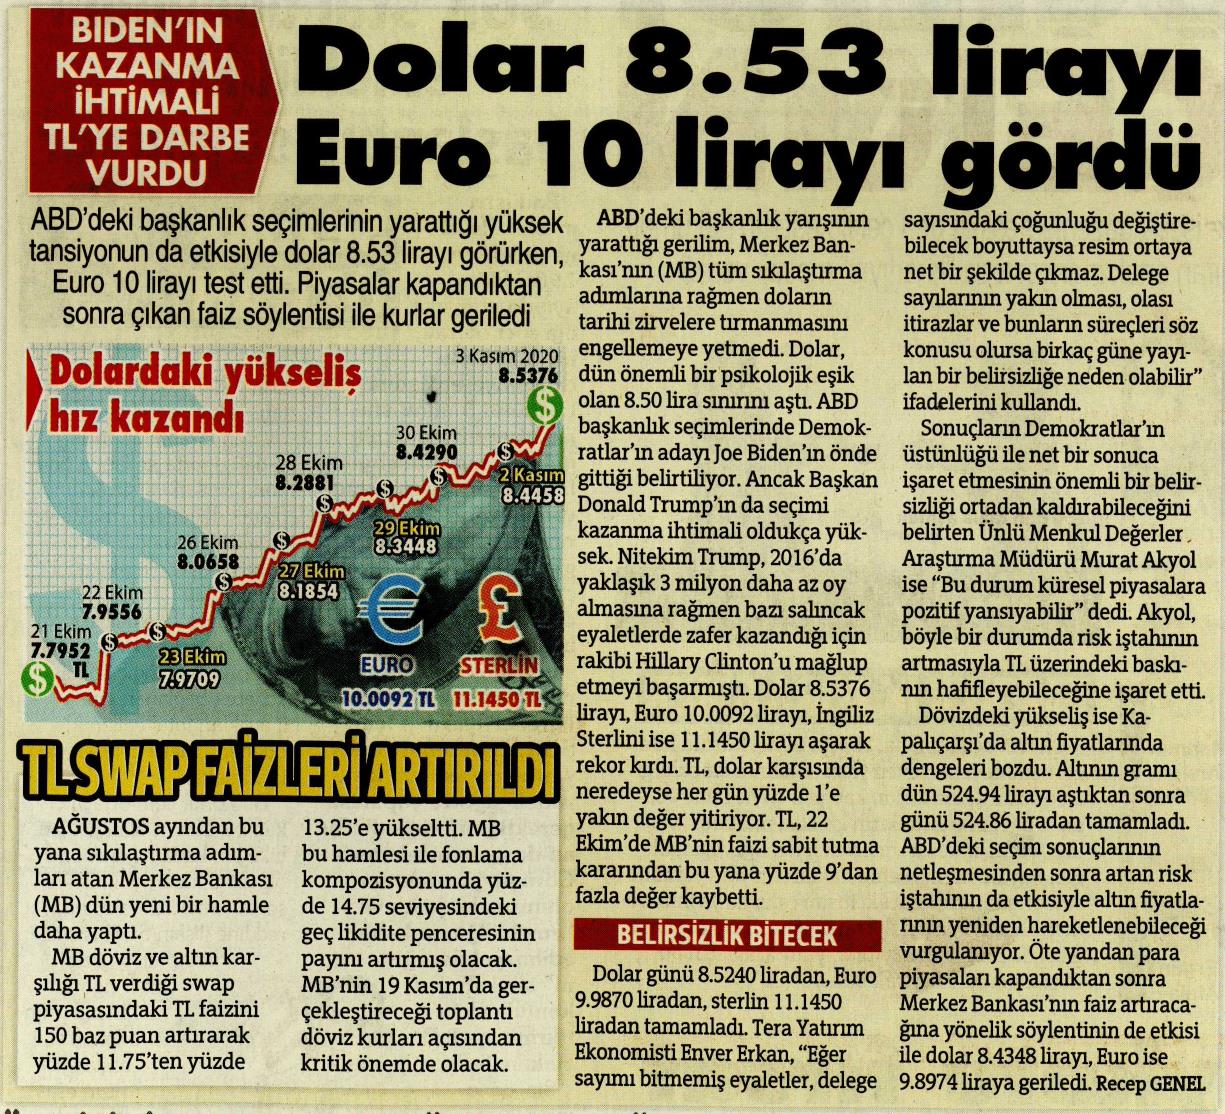 Dolar 8.53 Lirayı, Euro 10 Lirayı Gördü, Sözcü Gazetesi